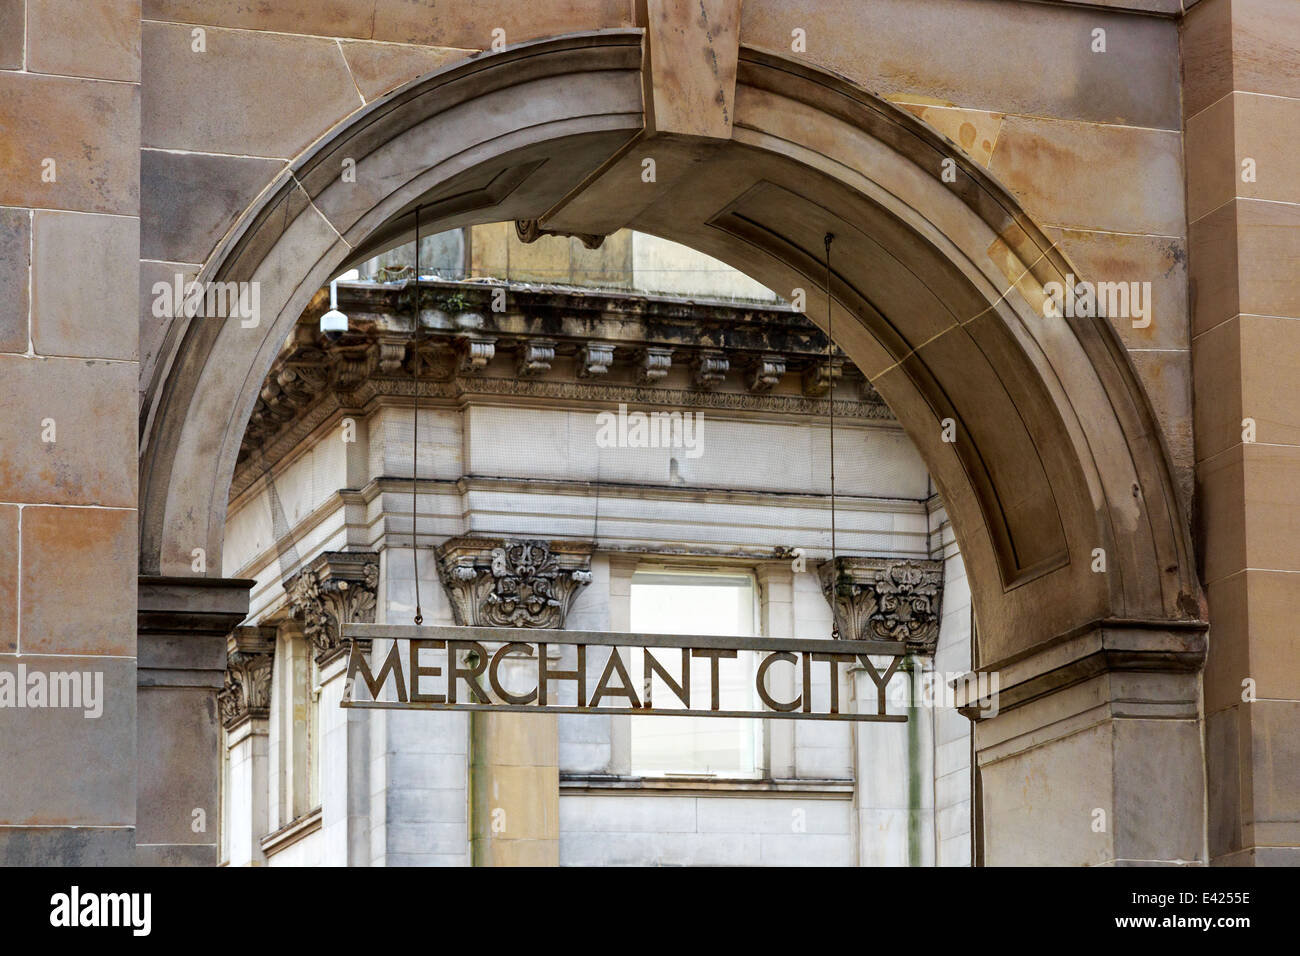 Arched entrance to Merchant City district of Glasgow city centre, Scotland, UK Stock Photo